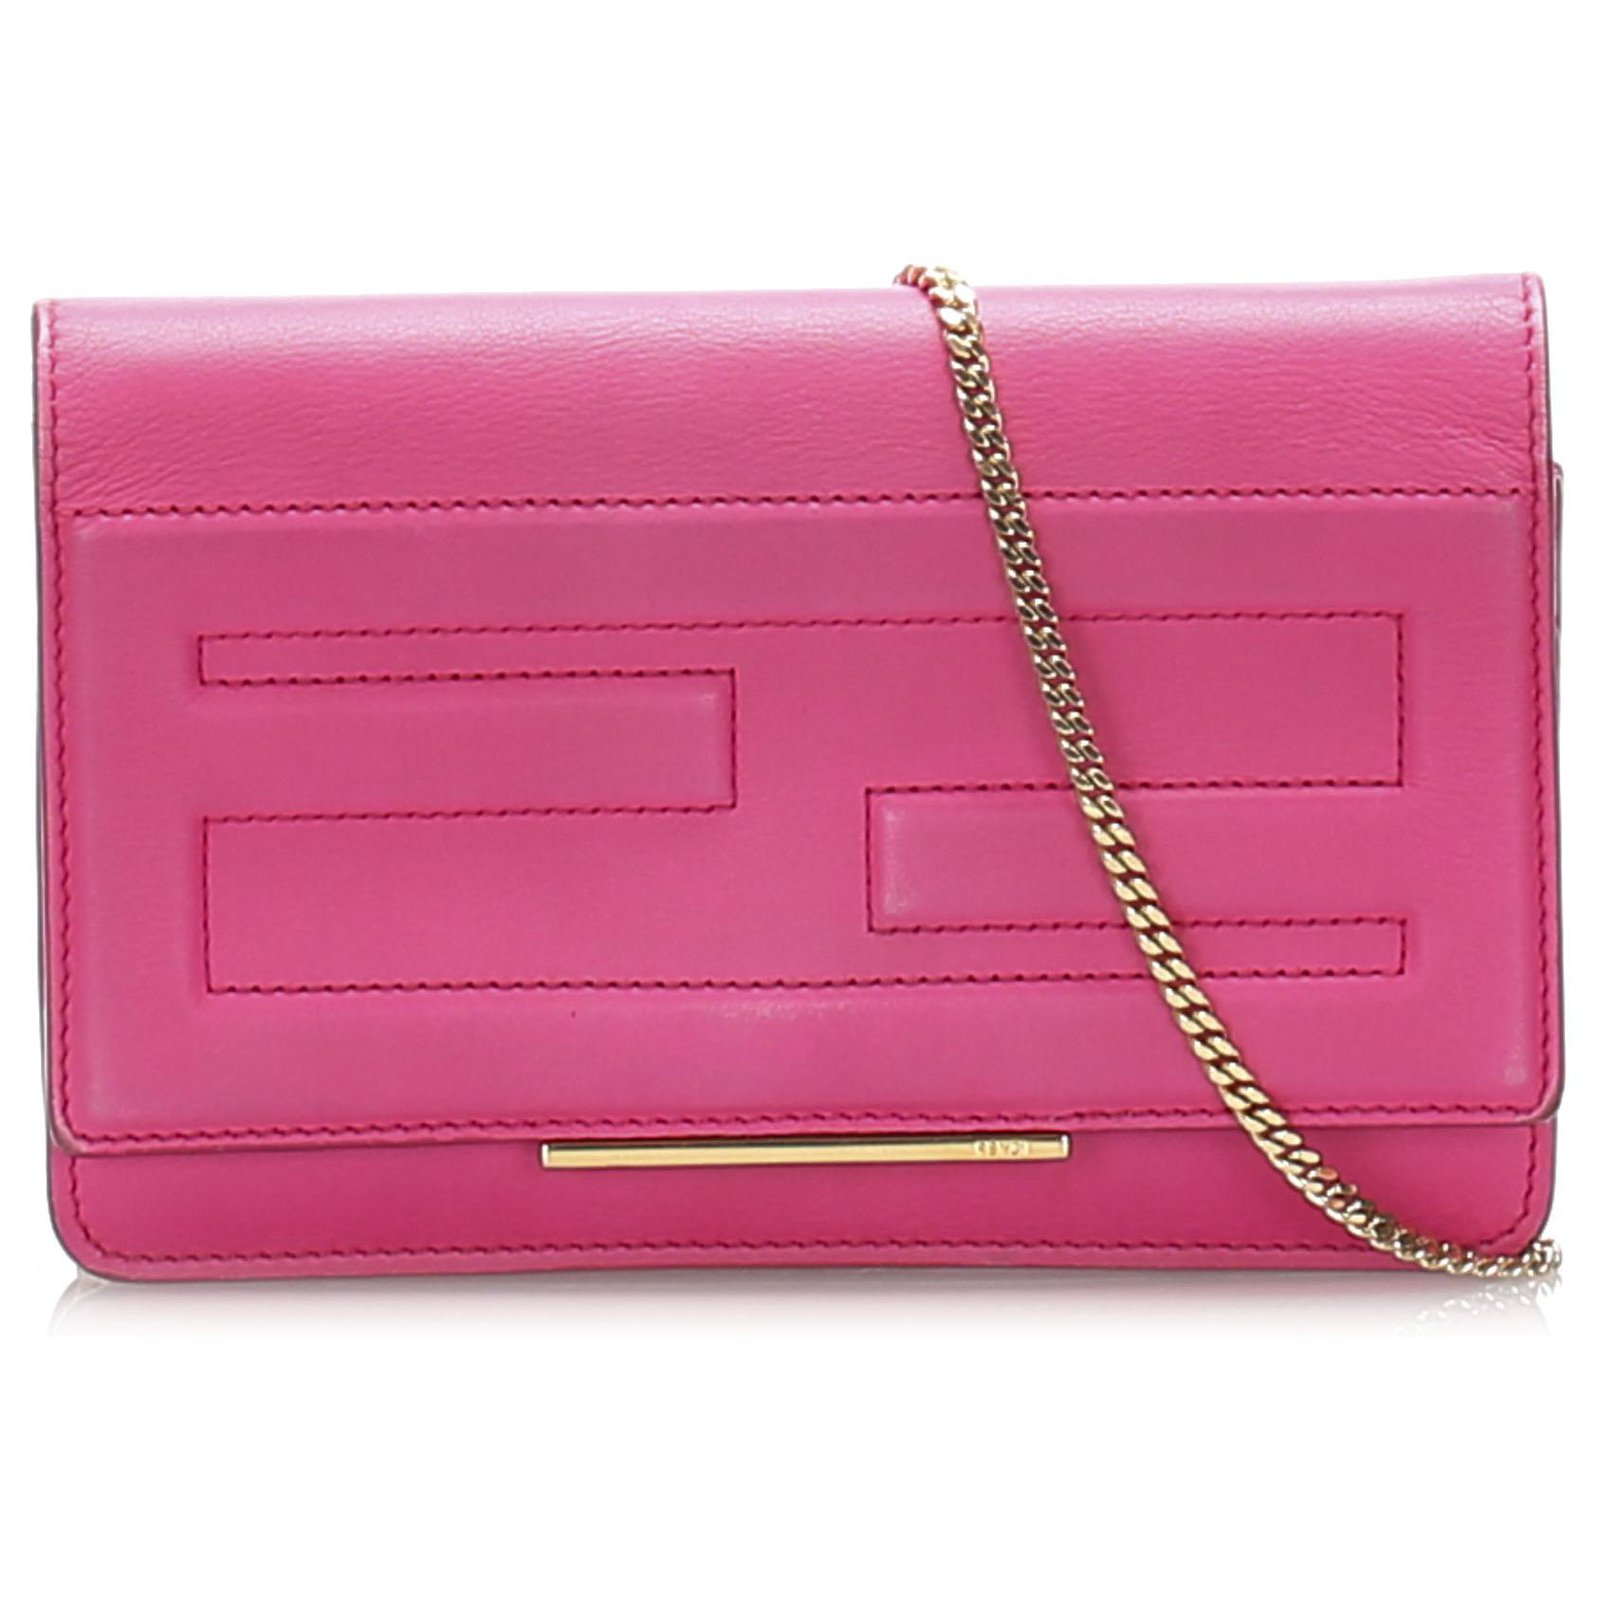 pink fendi wallet